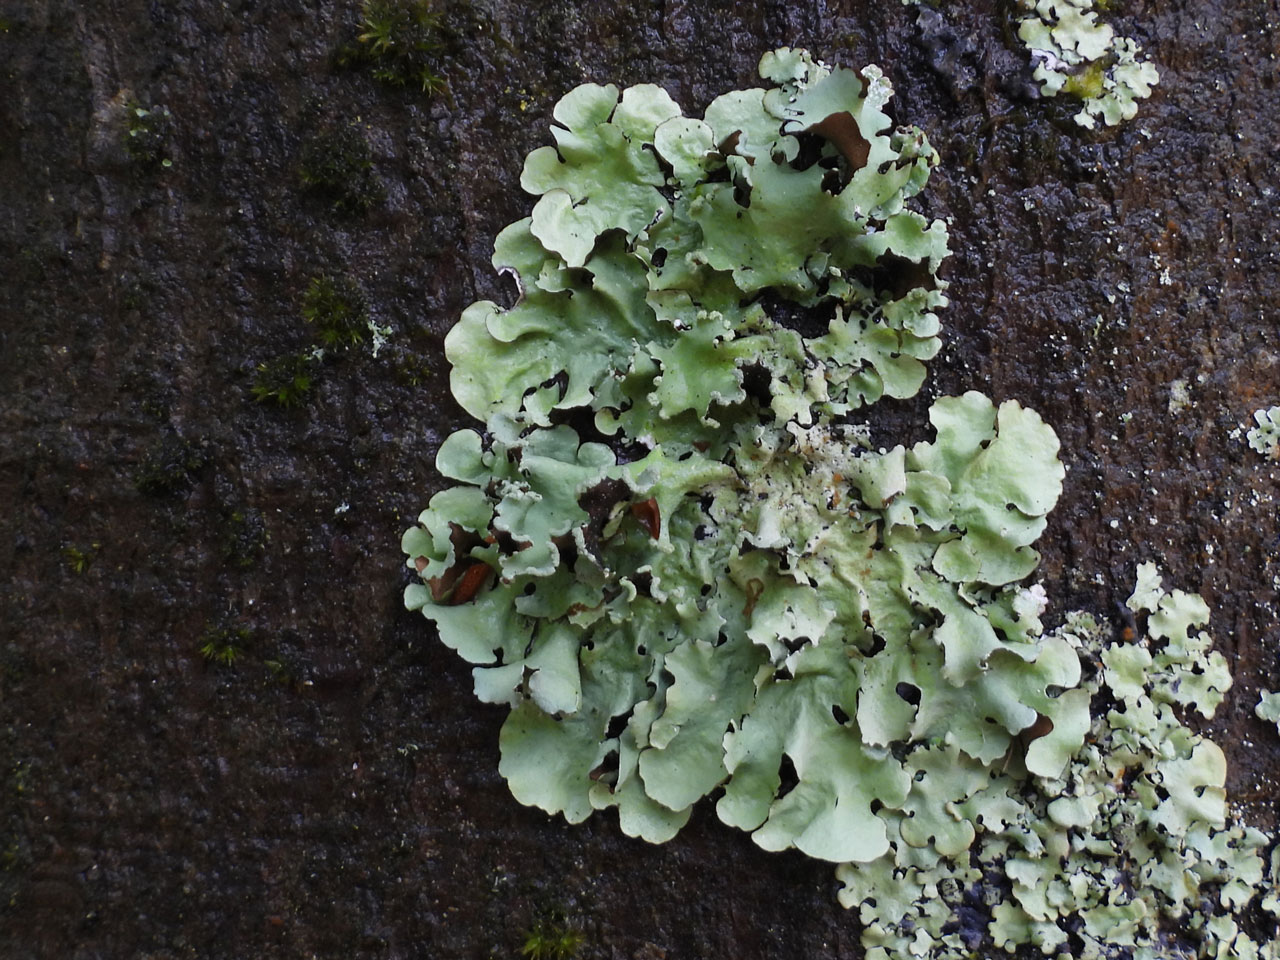 Parmotrema perlatum, Beech, Canterton, New Forest